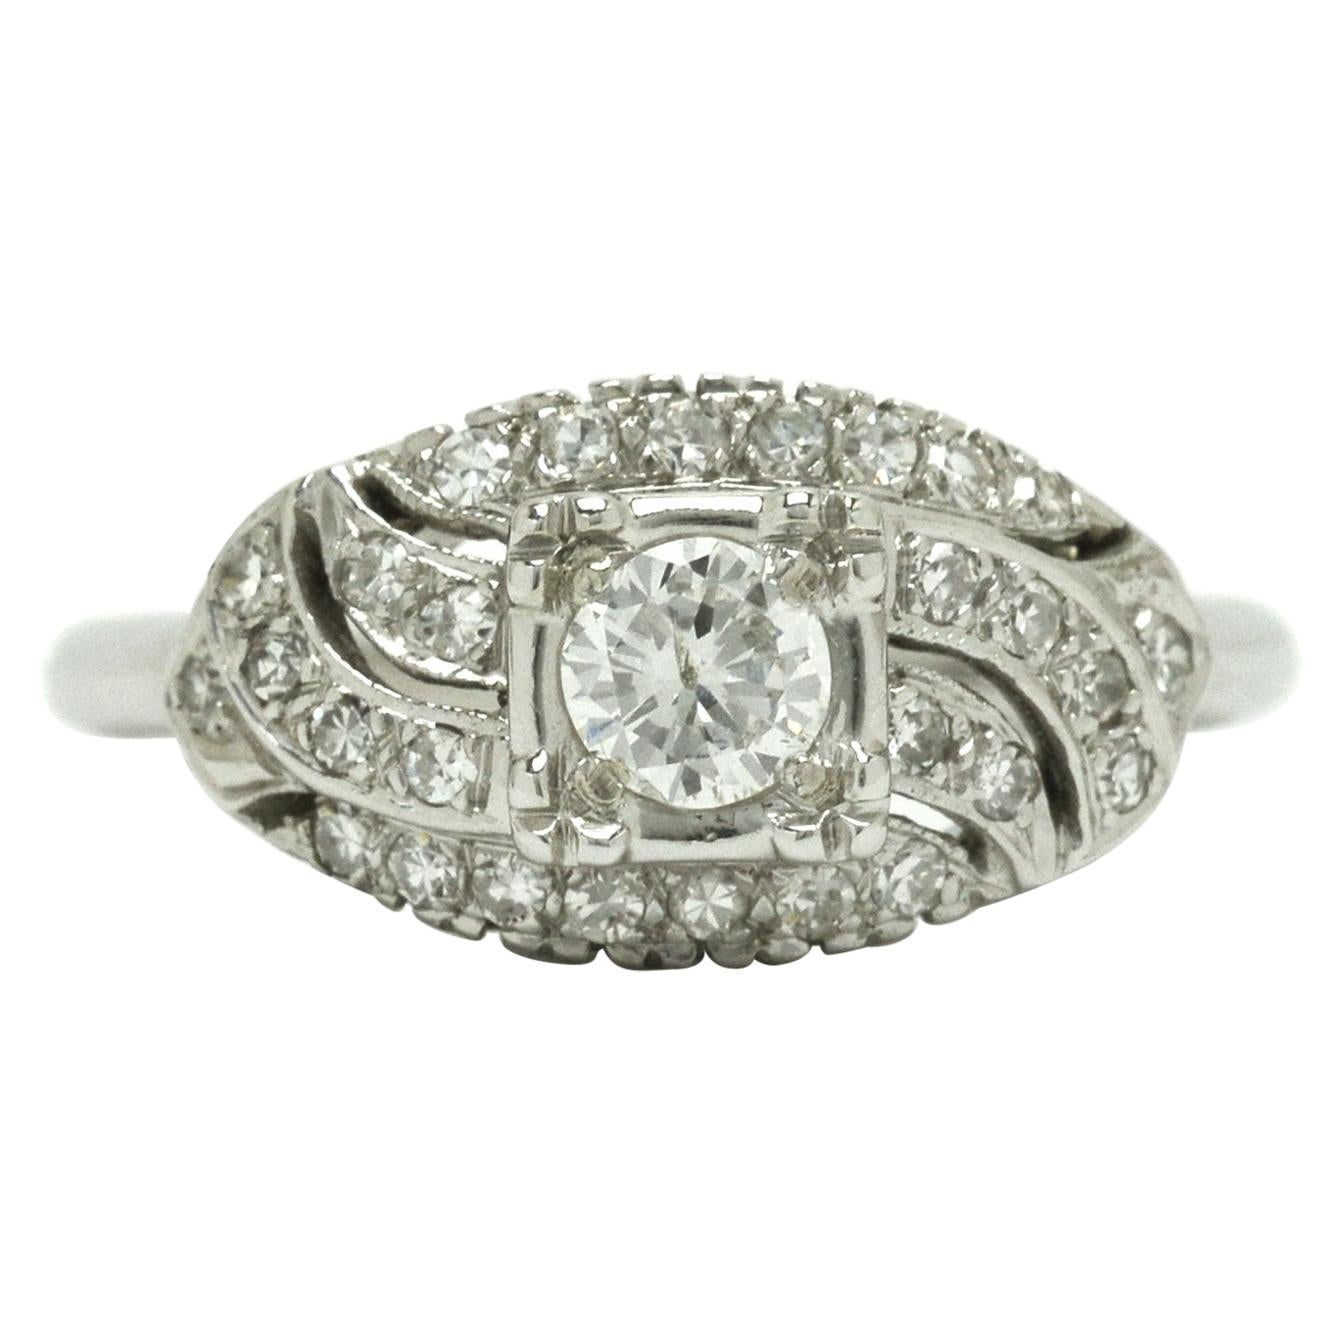 Vintage 1940s Diamond Engagement Ring Cluster Retro Swirling Openwork Milgrain